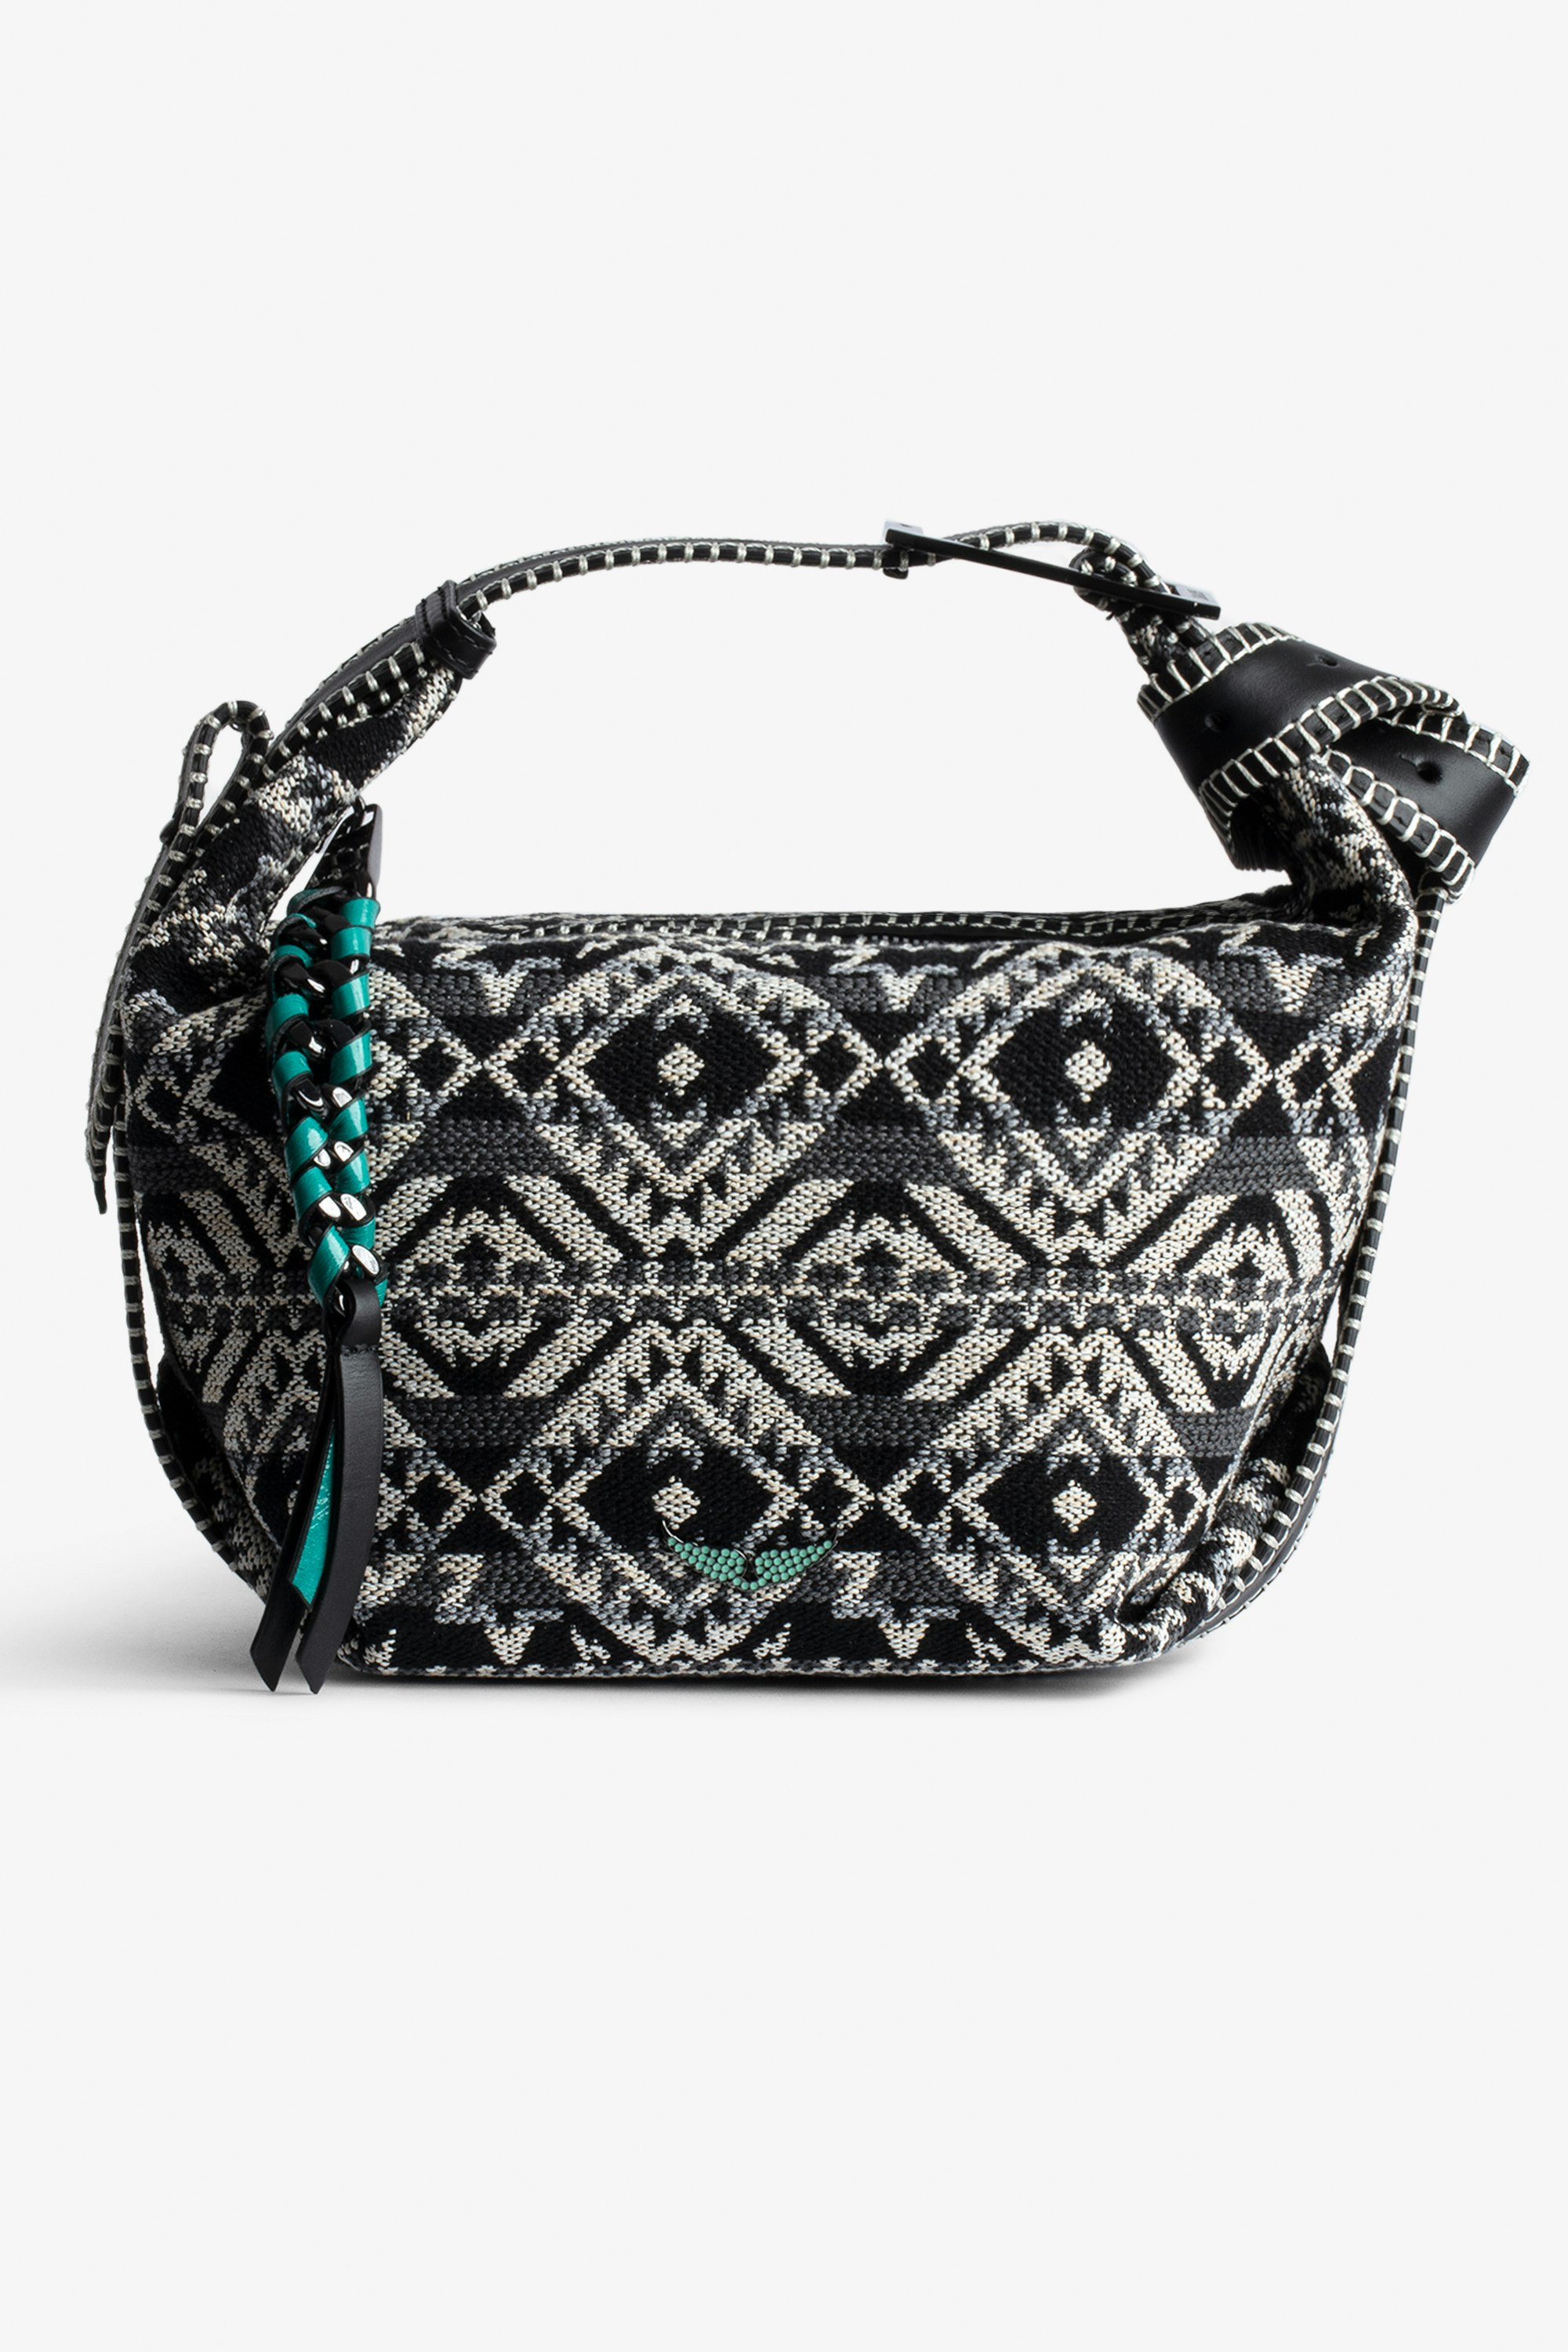 Le Cecilia Folk Jacquard Bag Women’s bag in black Jacquard with contrasting folk motif, handle and C-shaped metal buckle